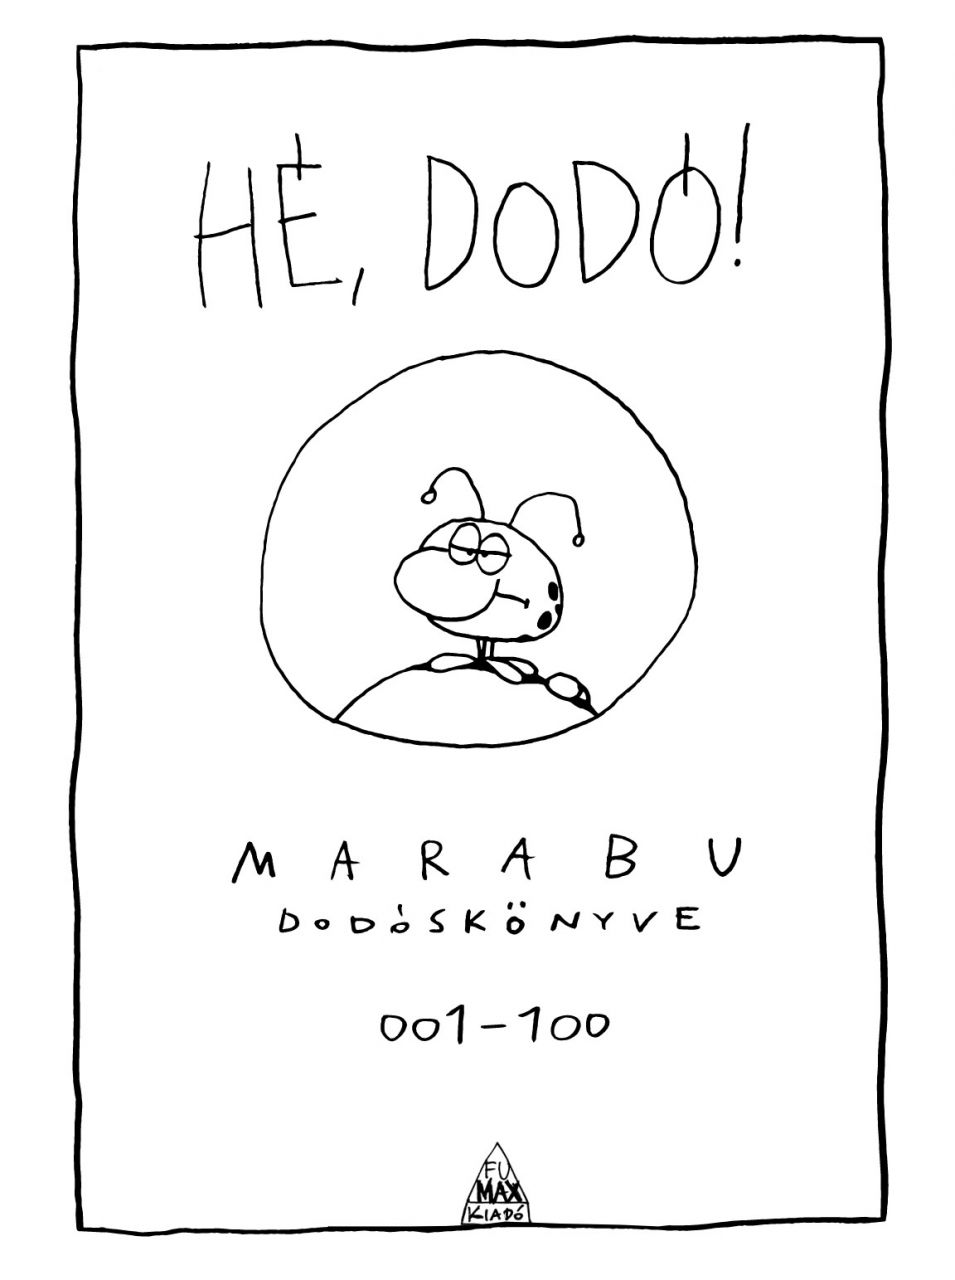 H, Dod! - Marabu dods knyve